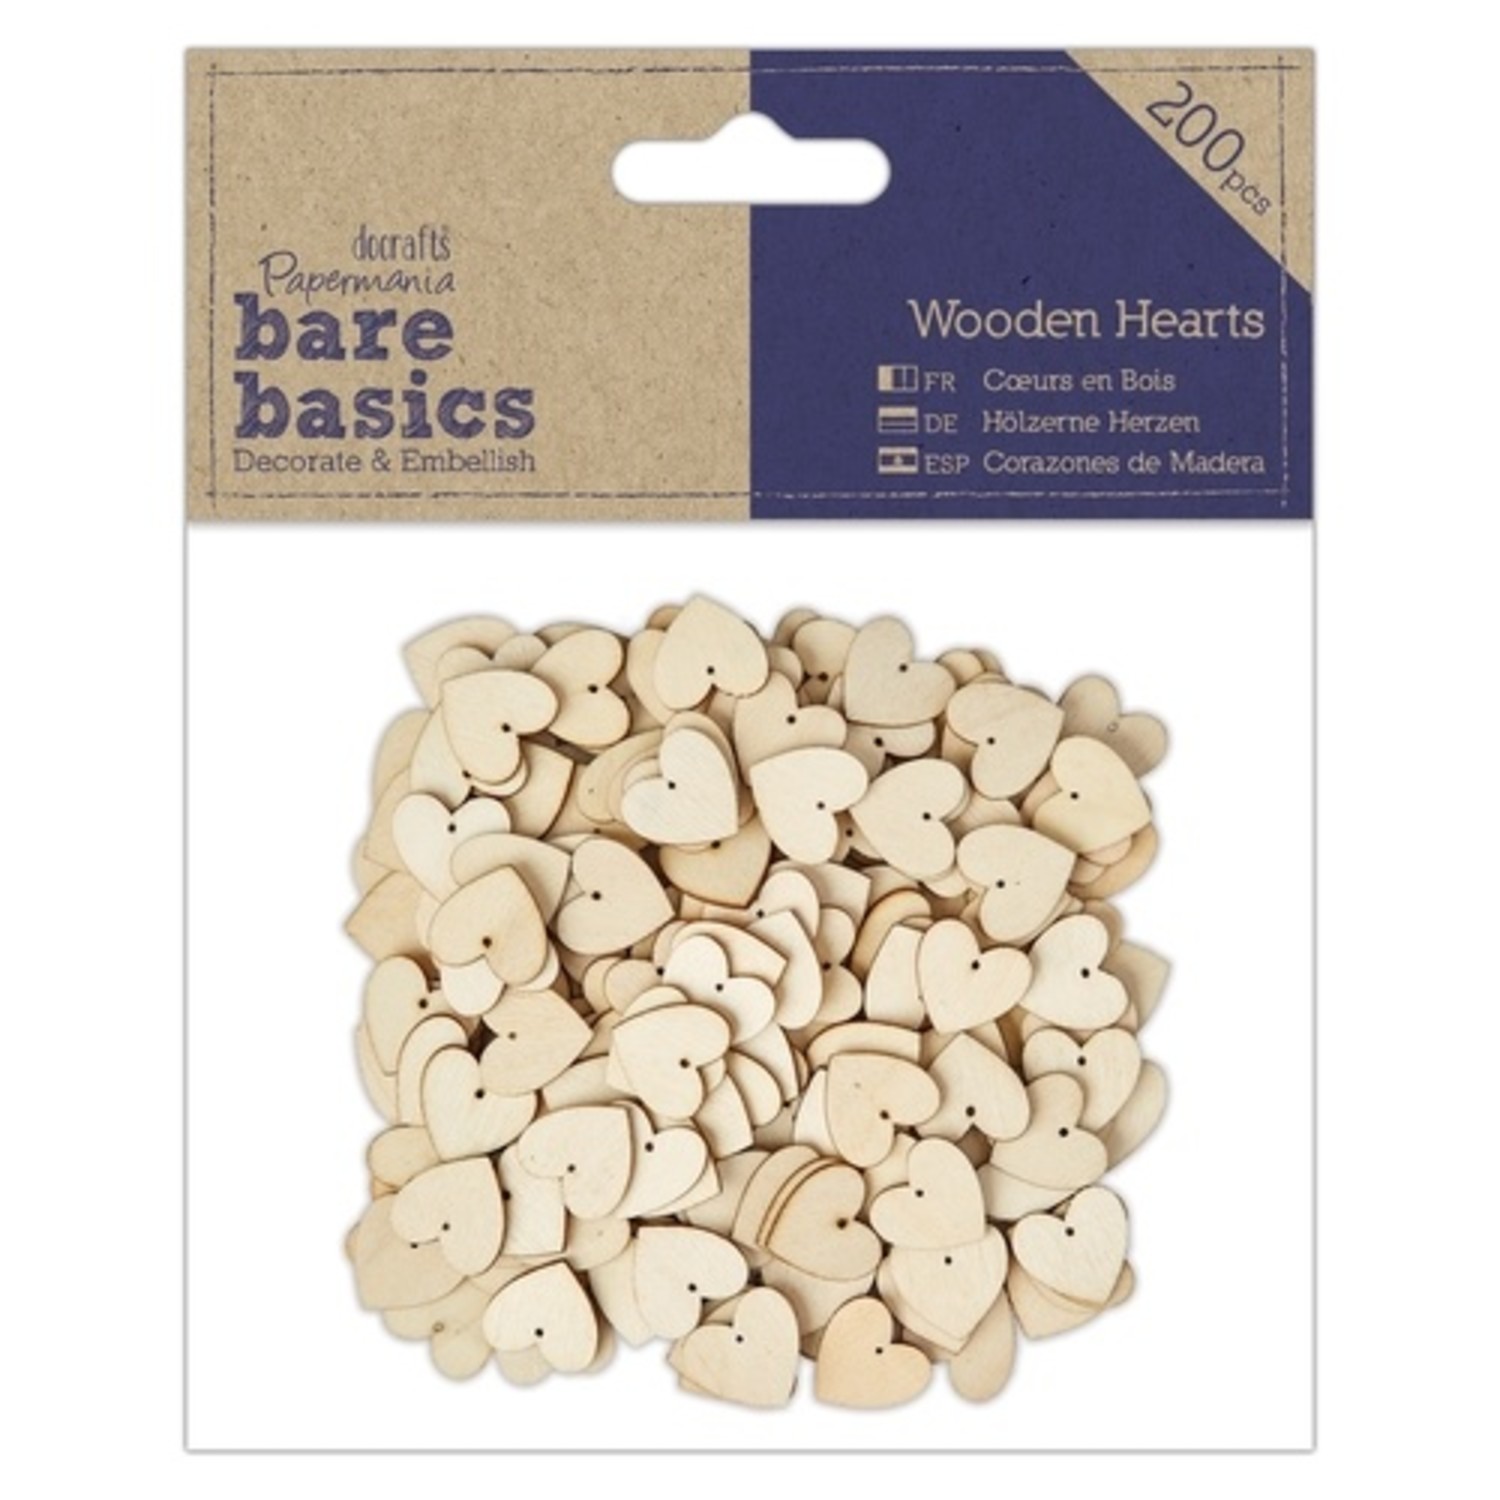 Bare Basics Wooden Hearts 200 Pack